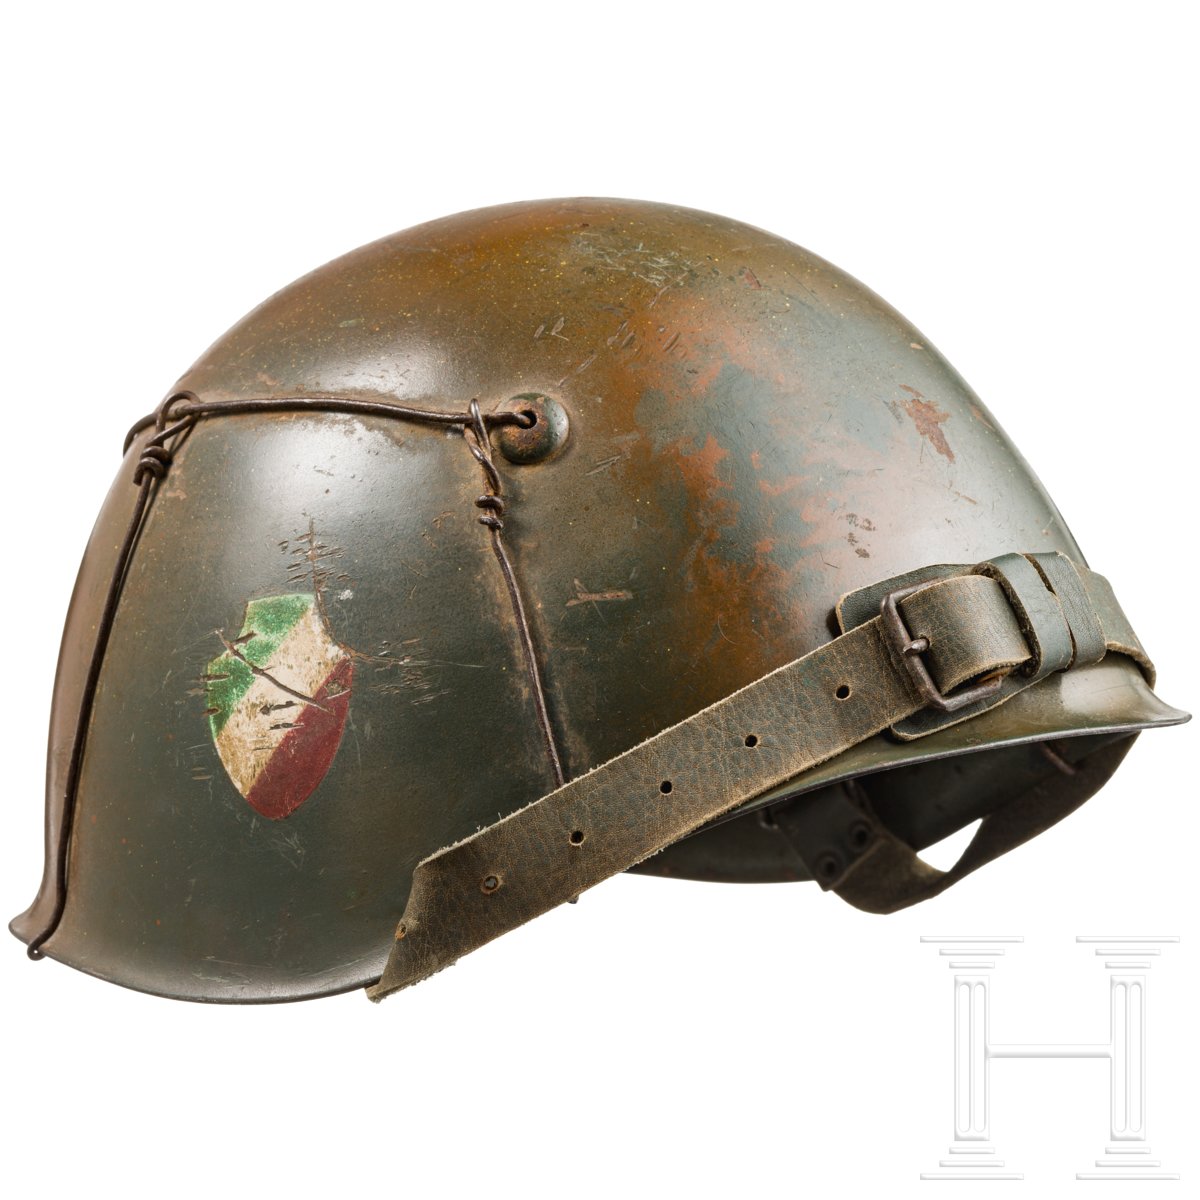 Stahlhelm der Divisione Italia in Tarnfarben, um 1943